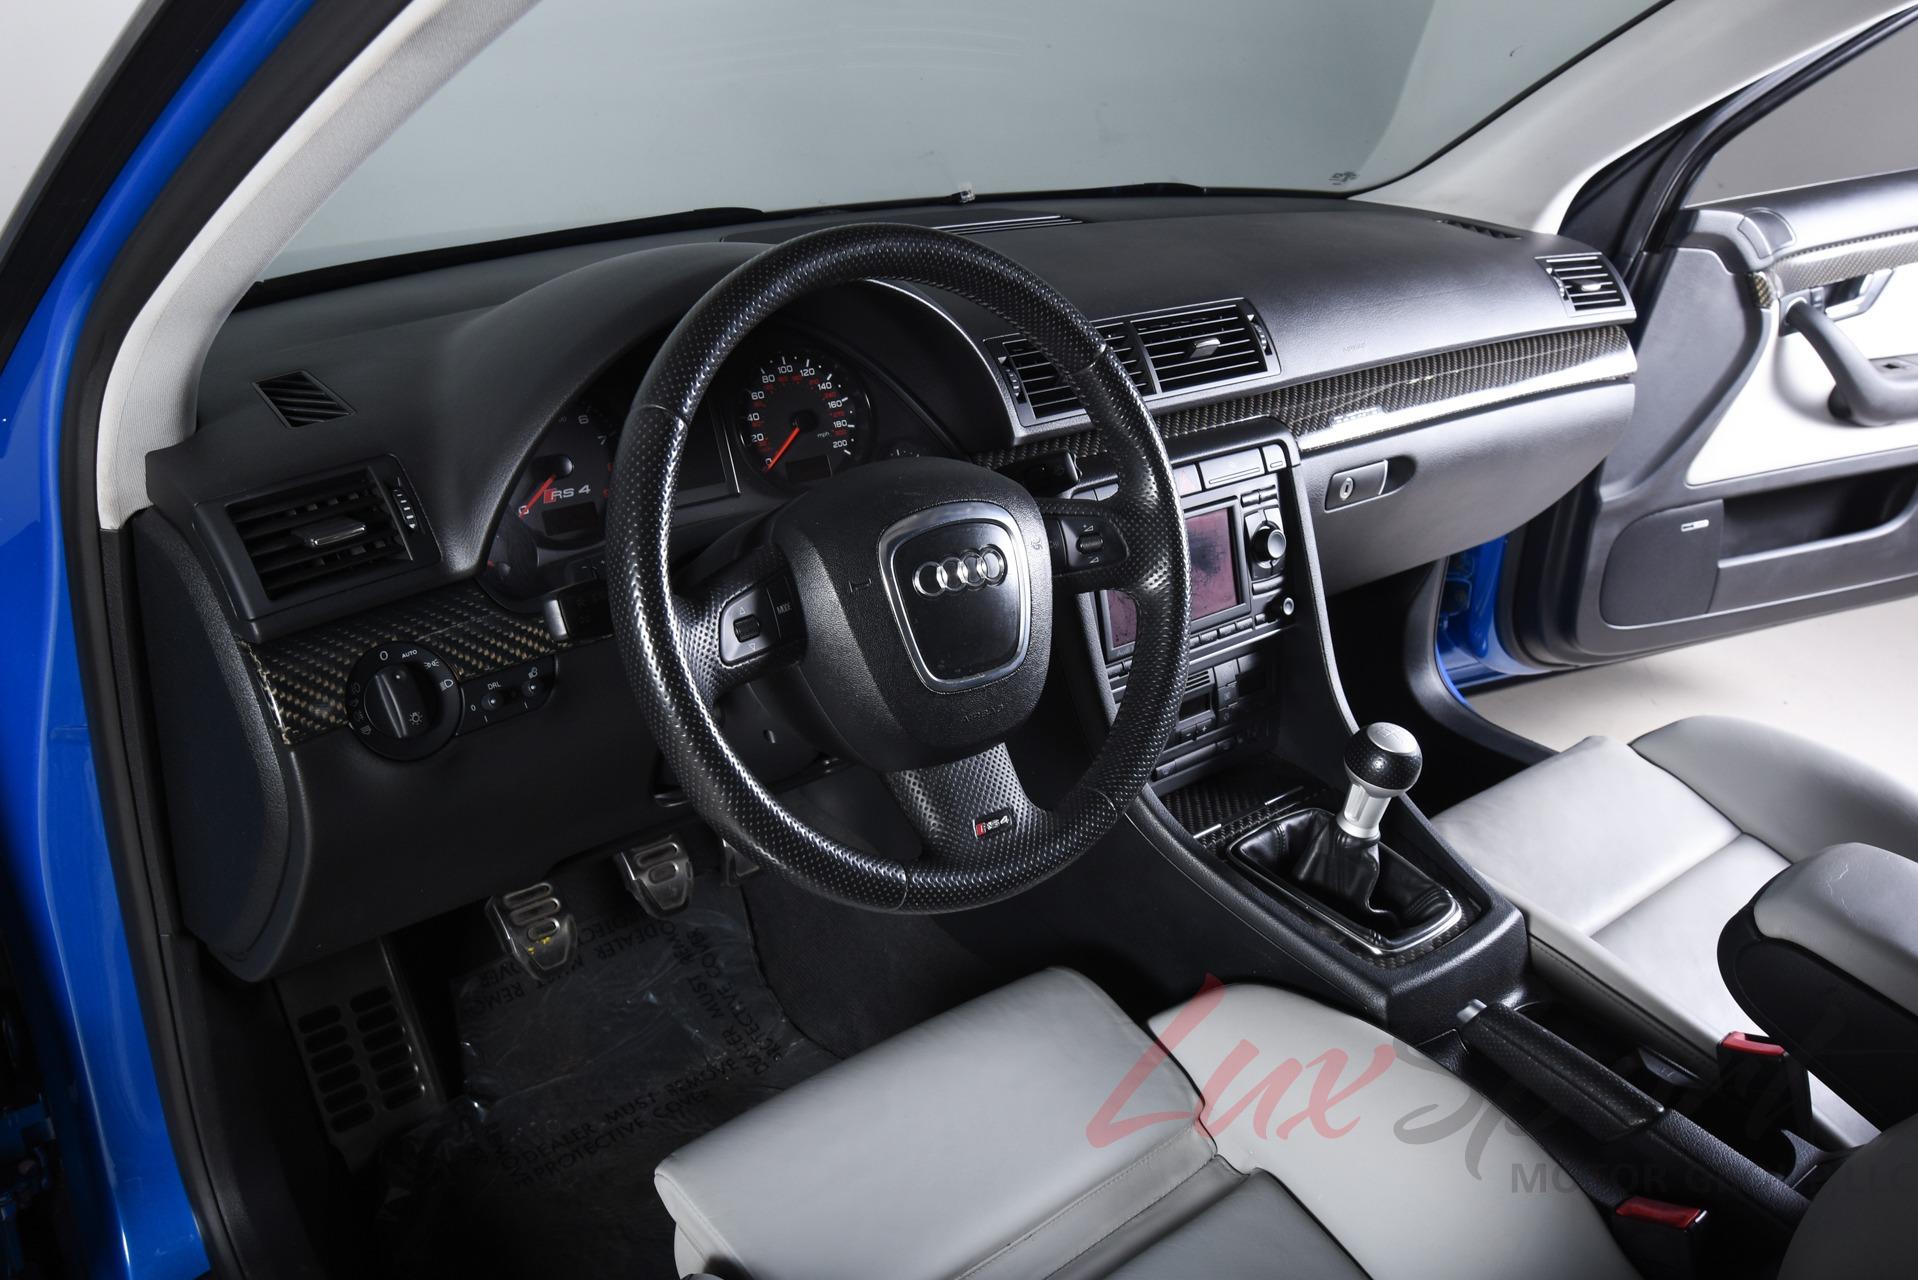 Used 2008 Audi RS 4 quattro | Syosset, NY